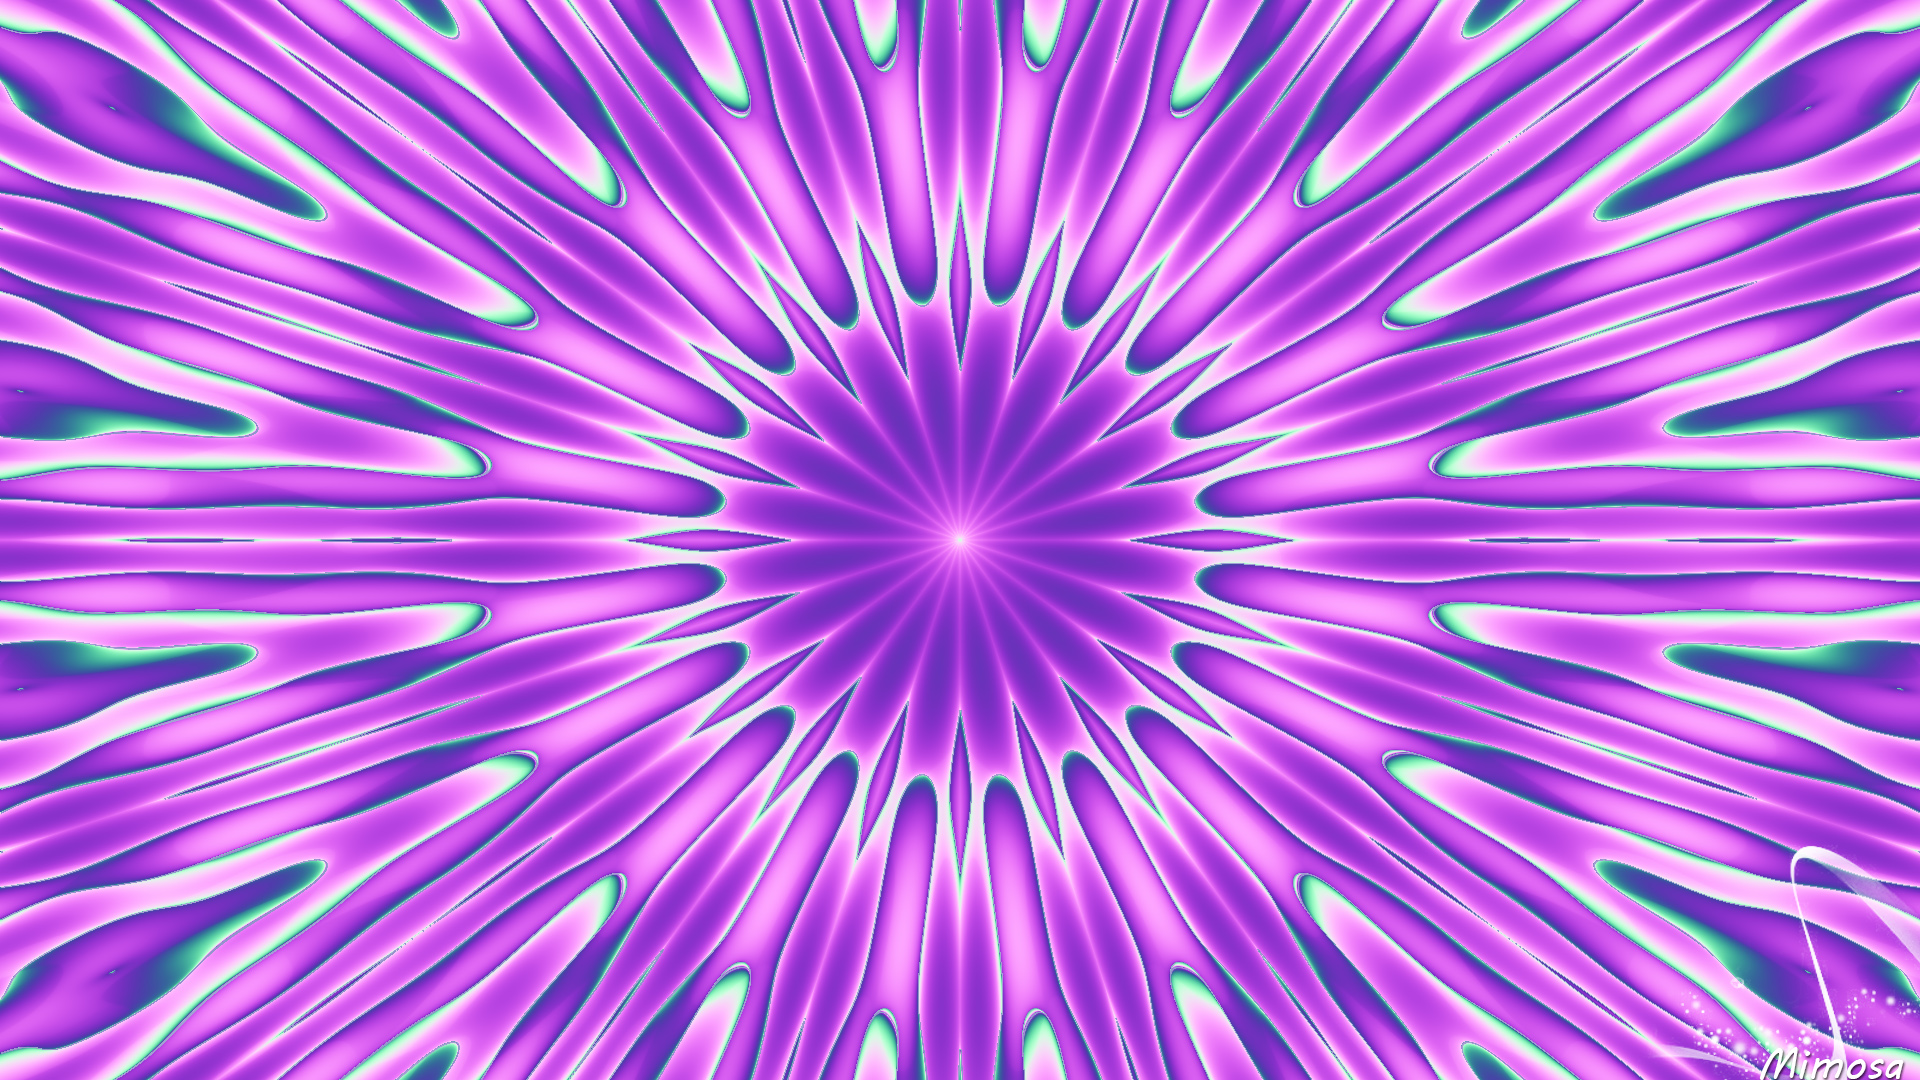 create kaleidoscope image websites